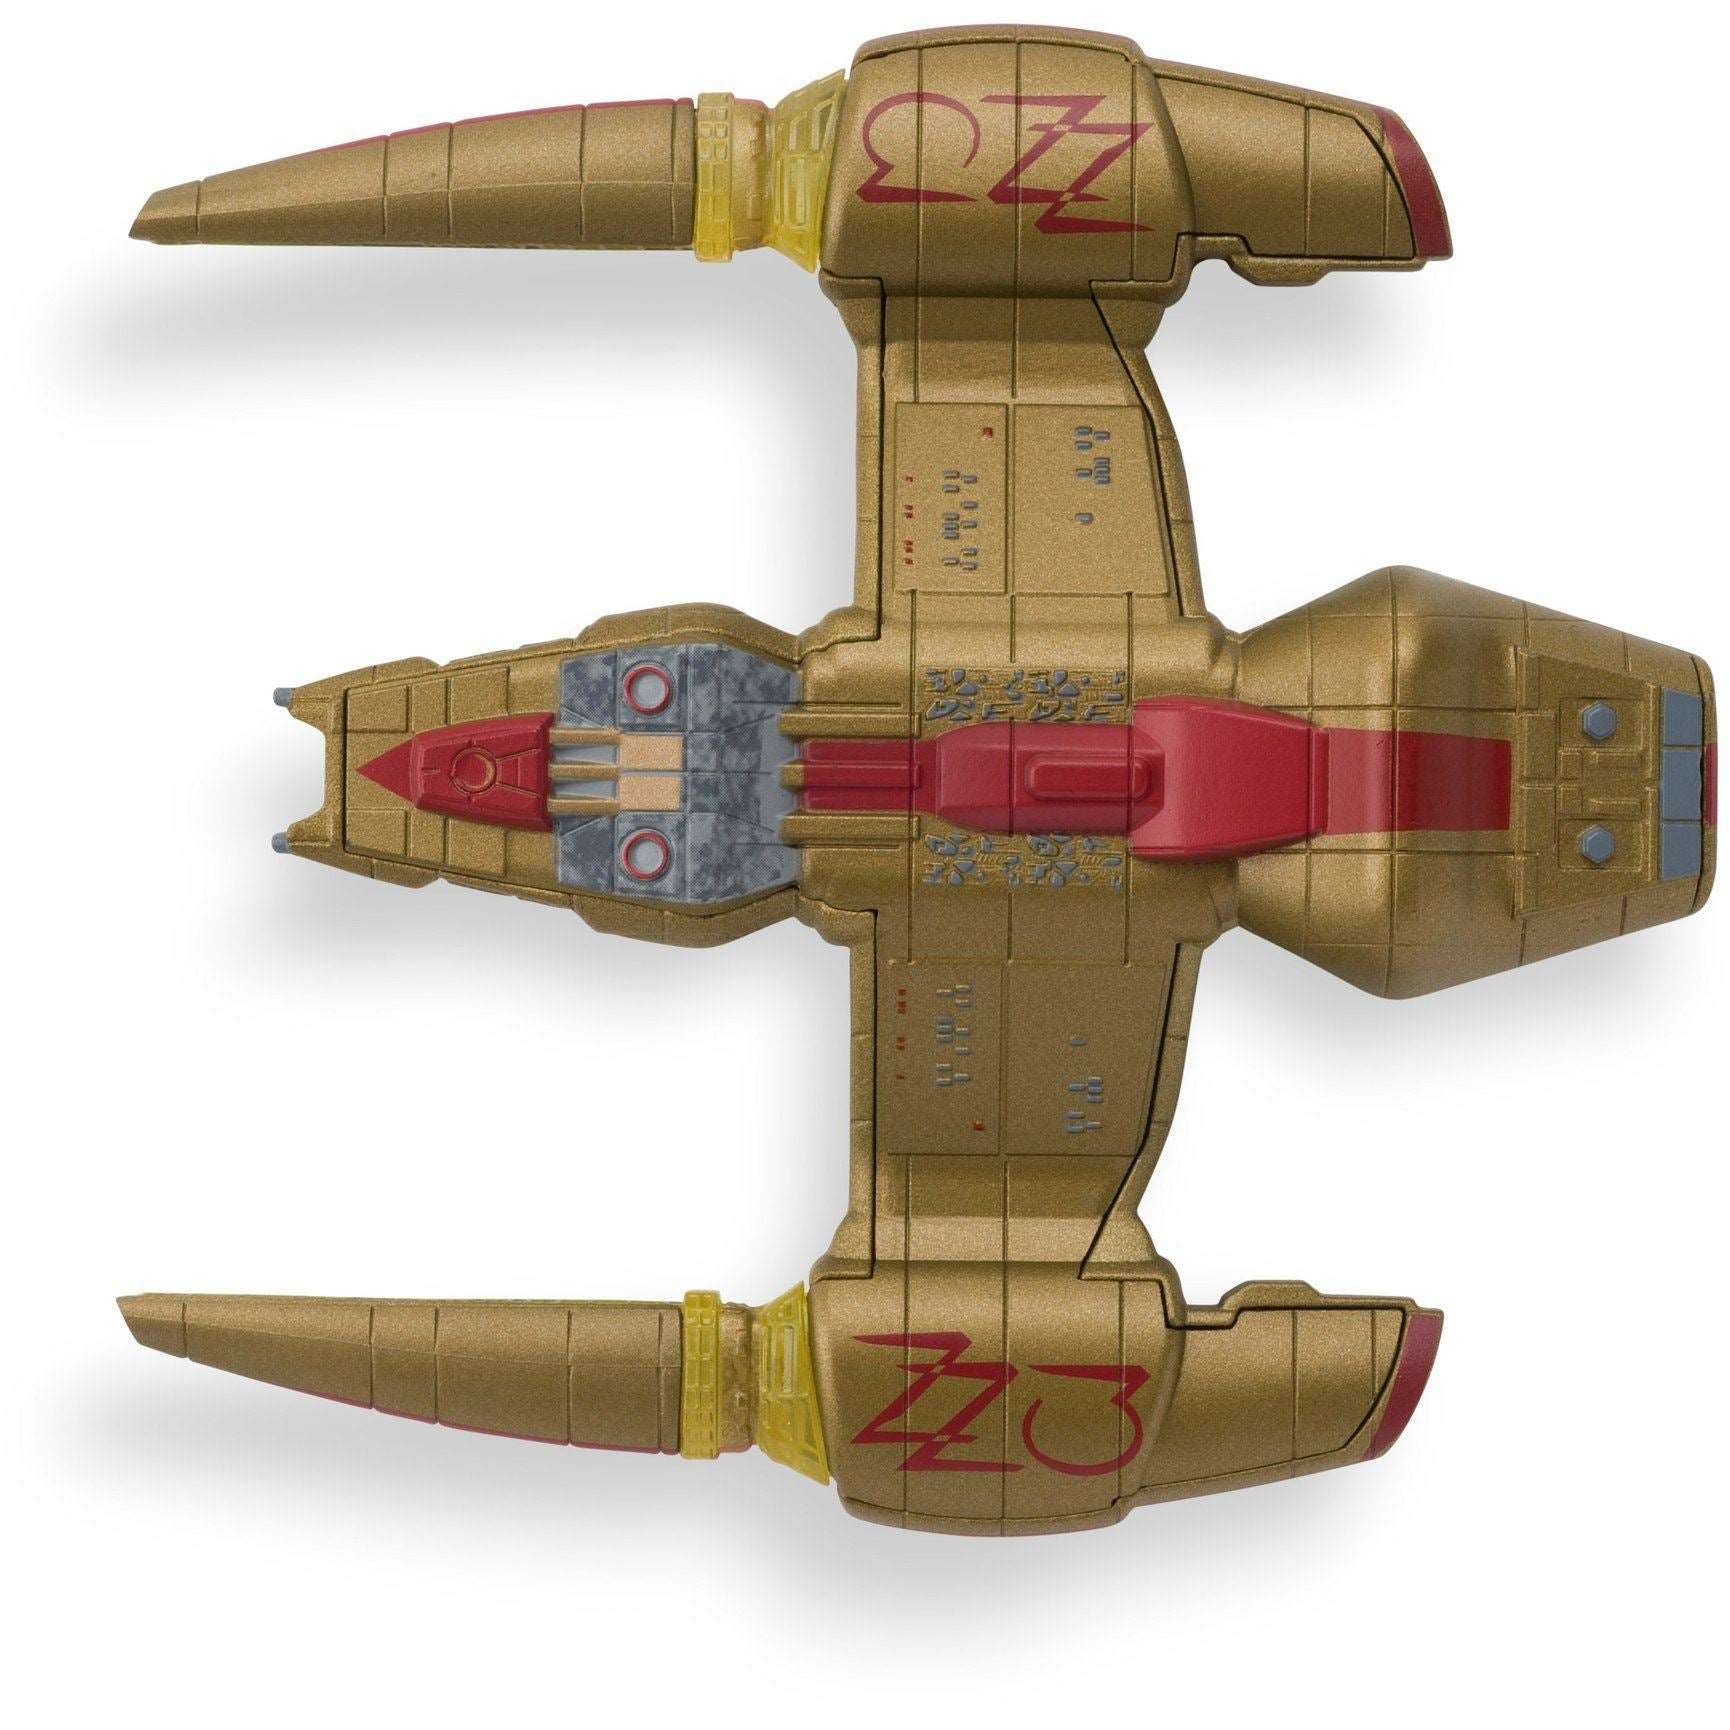 #133 Irina's Racing Ship (Terrellian Racer) Model Die Cast Ship (Eaglemoss Star Trek)